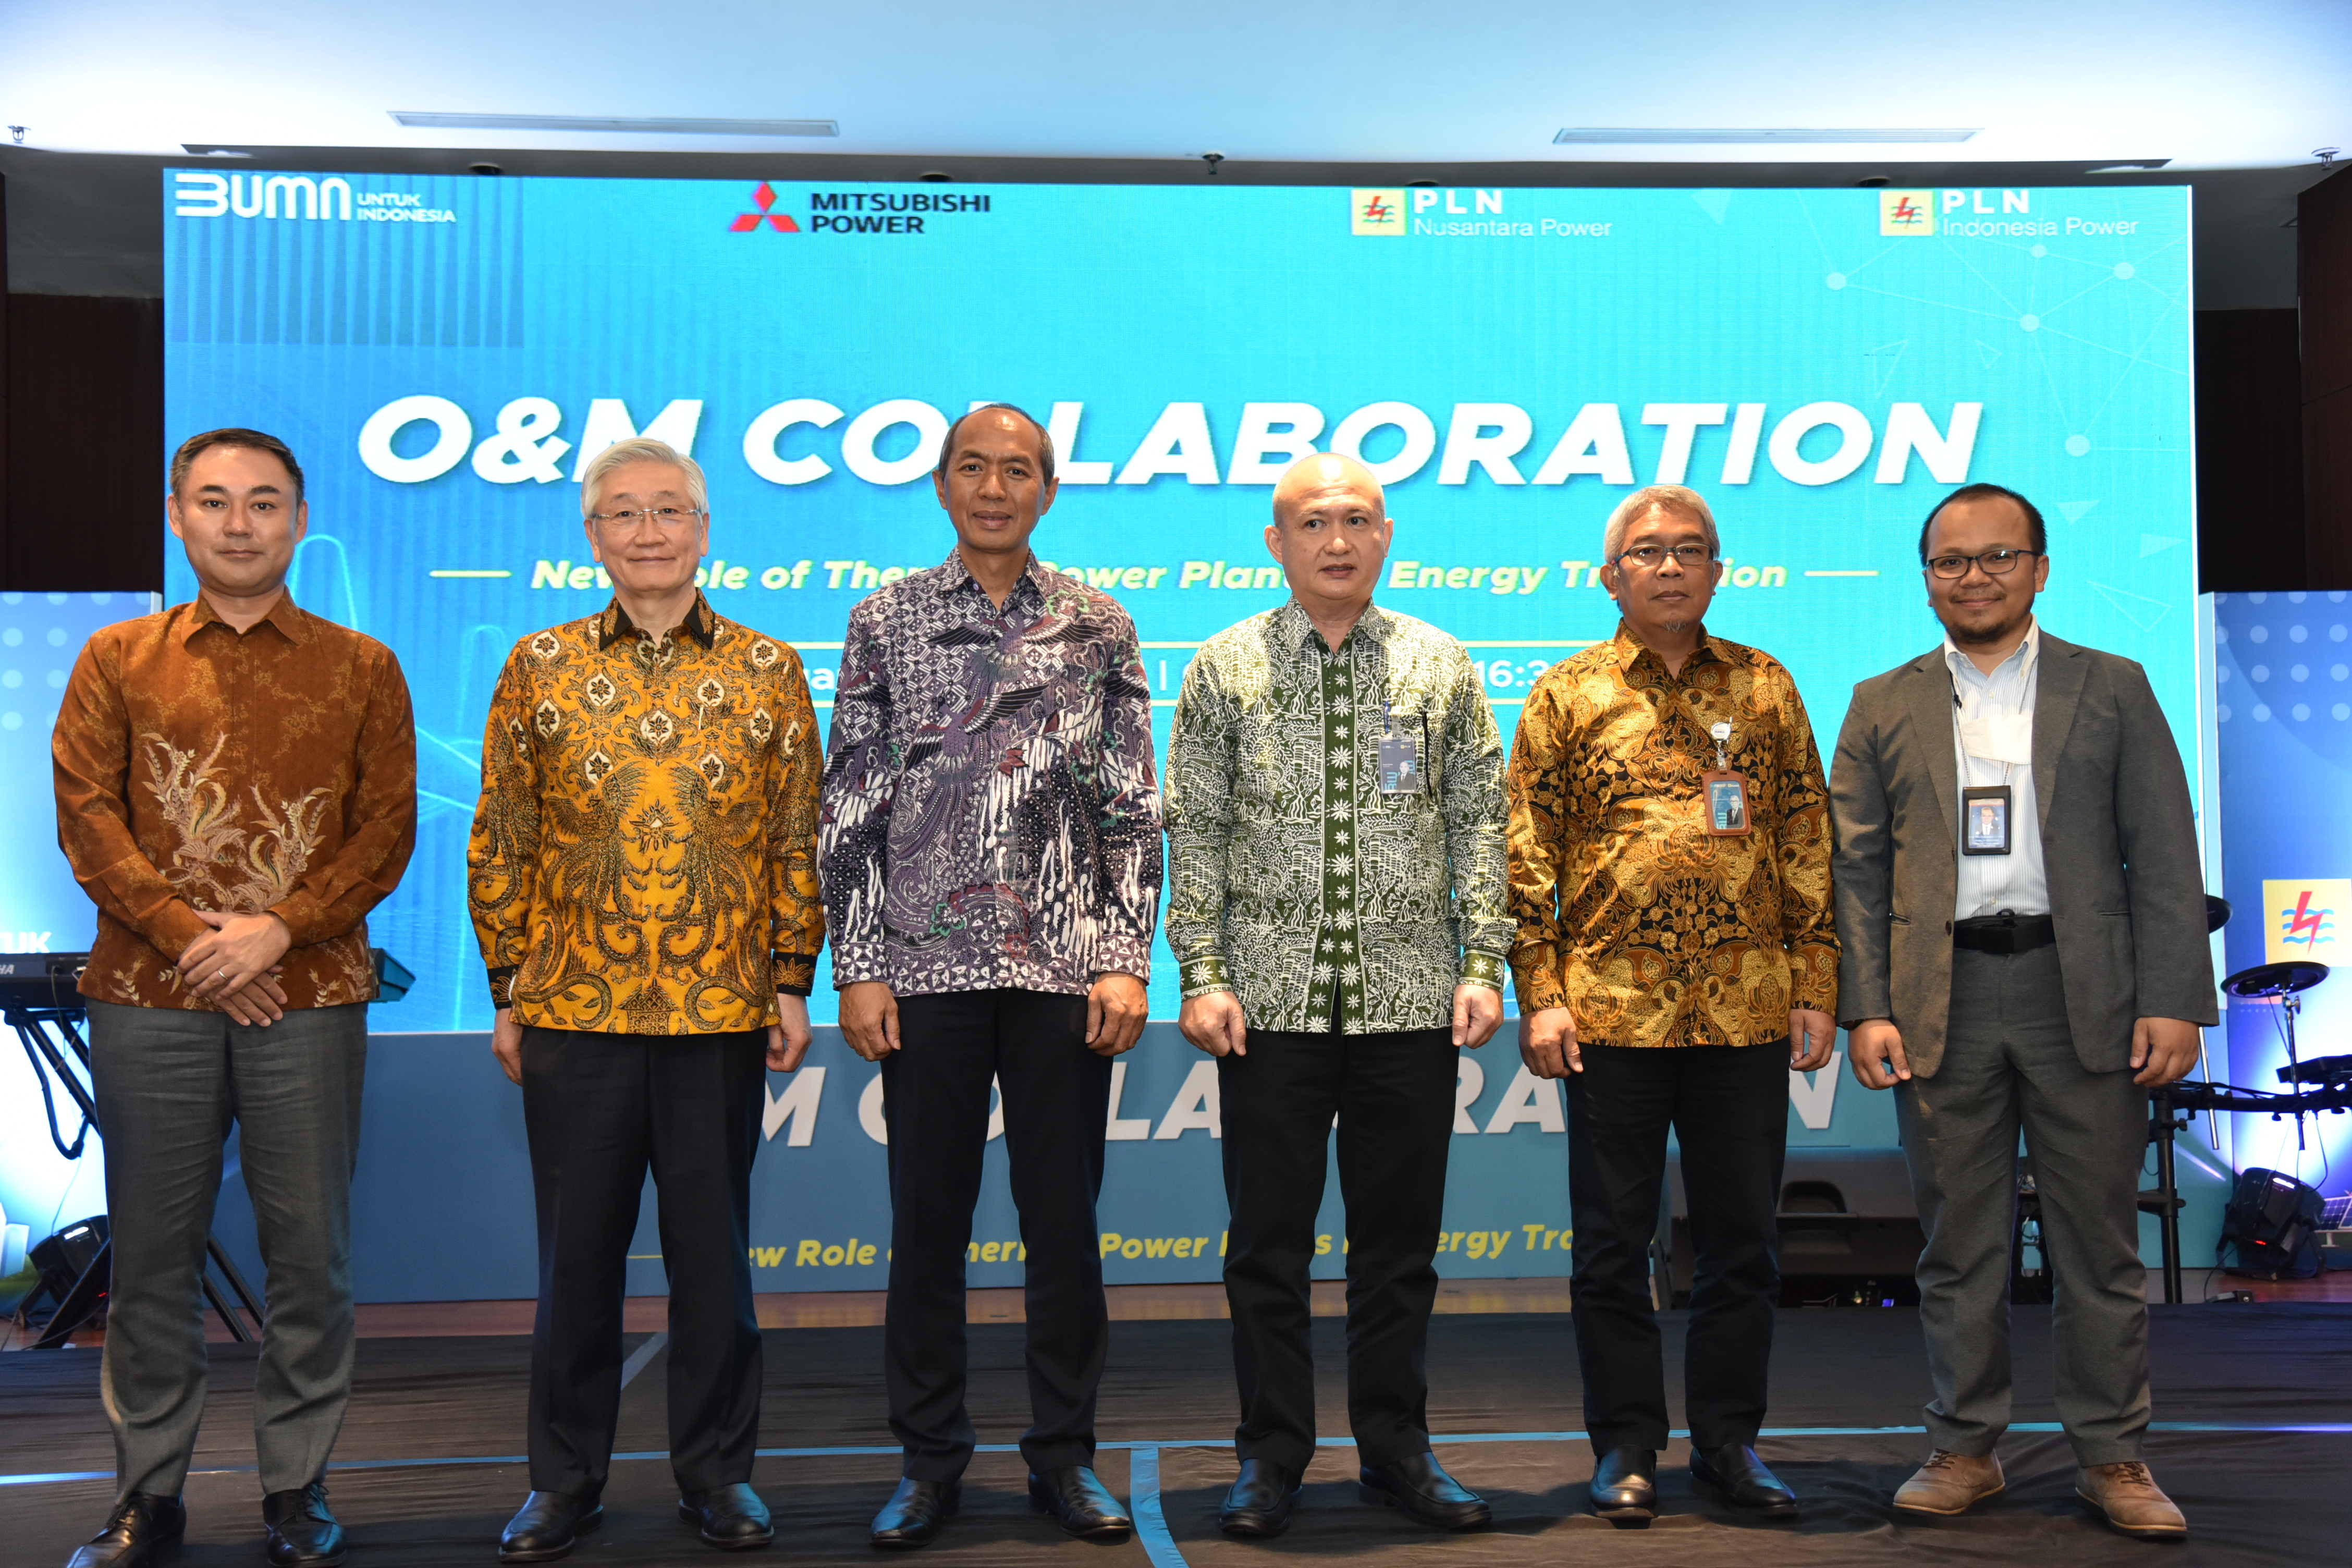 (From left to right) Mr. Kazuki Ishikura (Mitsubishi Power Asia Pacific), Mr. Ken Kawai (MHI), Mr. Edwin Nugraha Putra (PLN IP), Mr. Iwan Utama (PT. PLN (Persero)), Mr. Rachmad Handoko (PLN IP) and Dr. Firman Bagja Juangsa (Institut Teknologi Bandung) at the O&M Collaboration Seminar